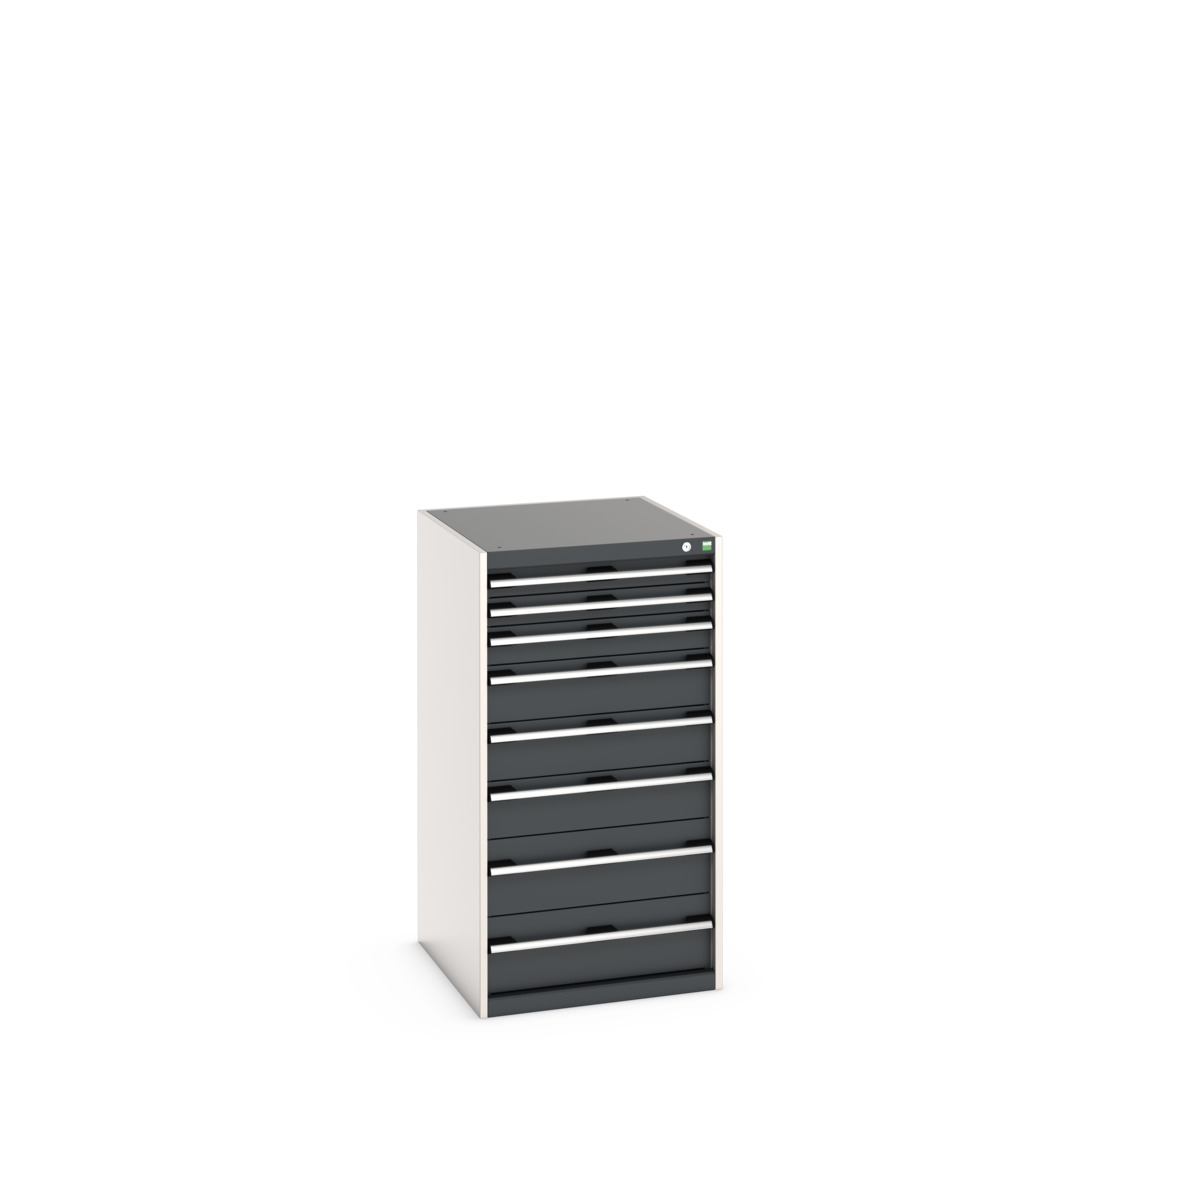 40027039. - cubio drawer cabinet